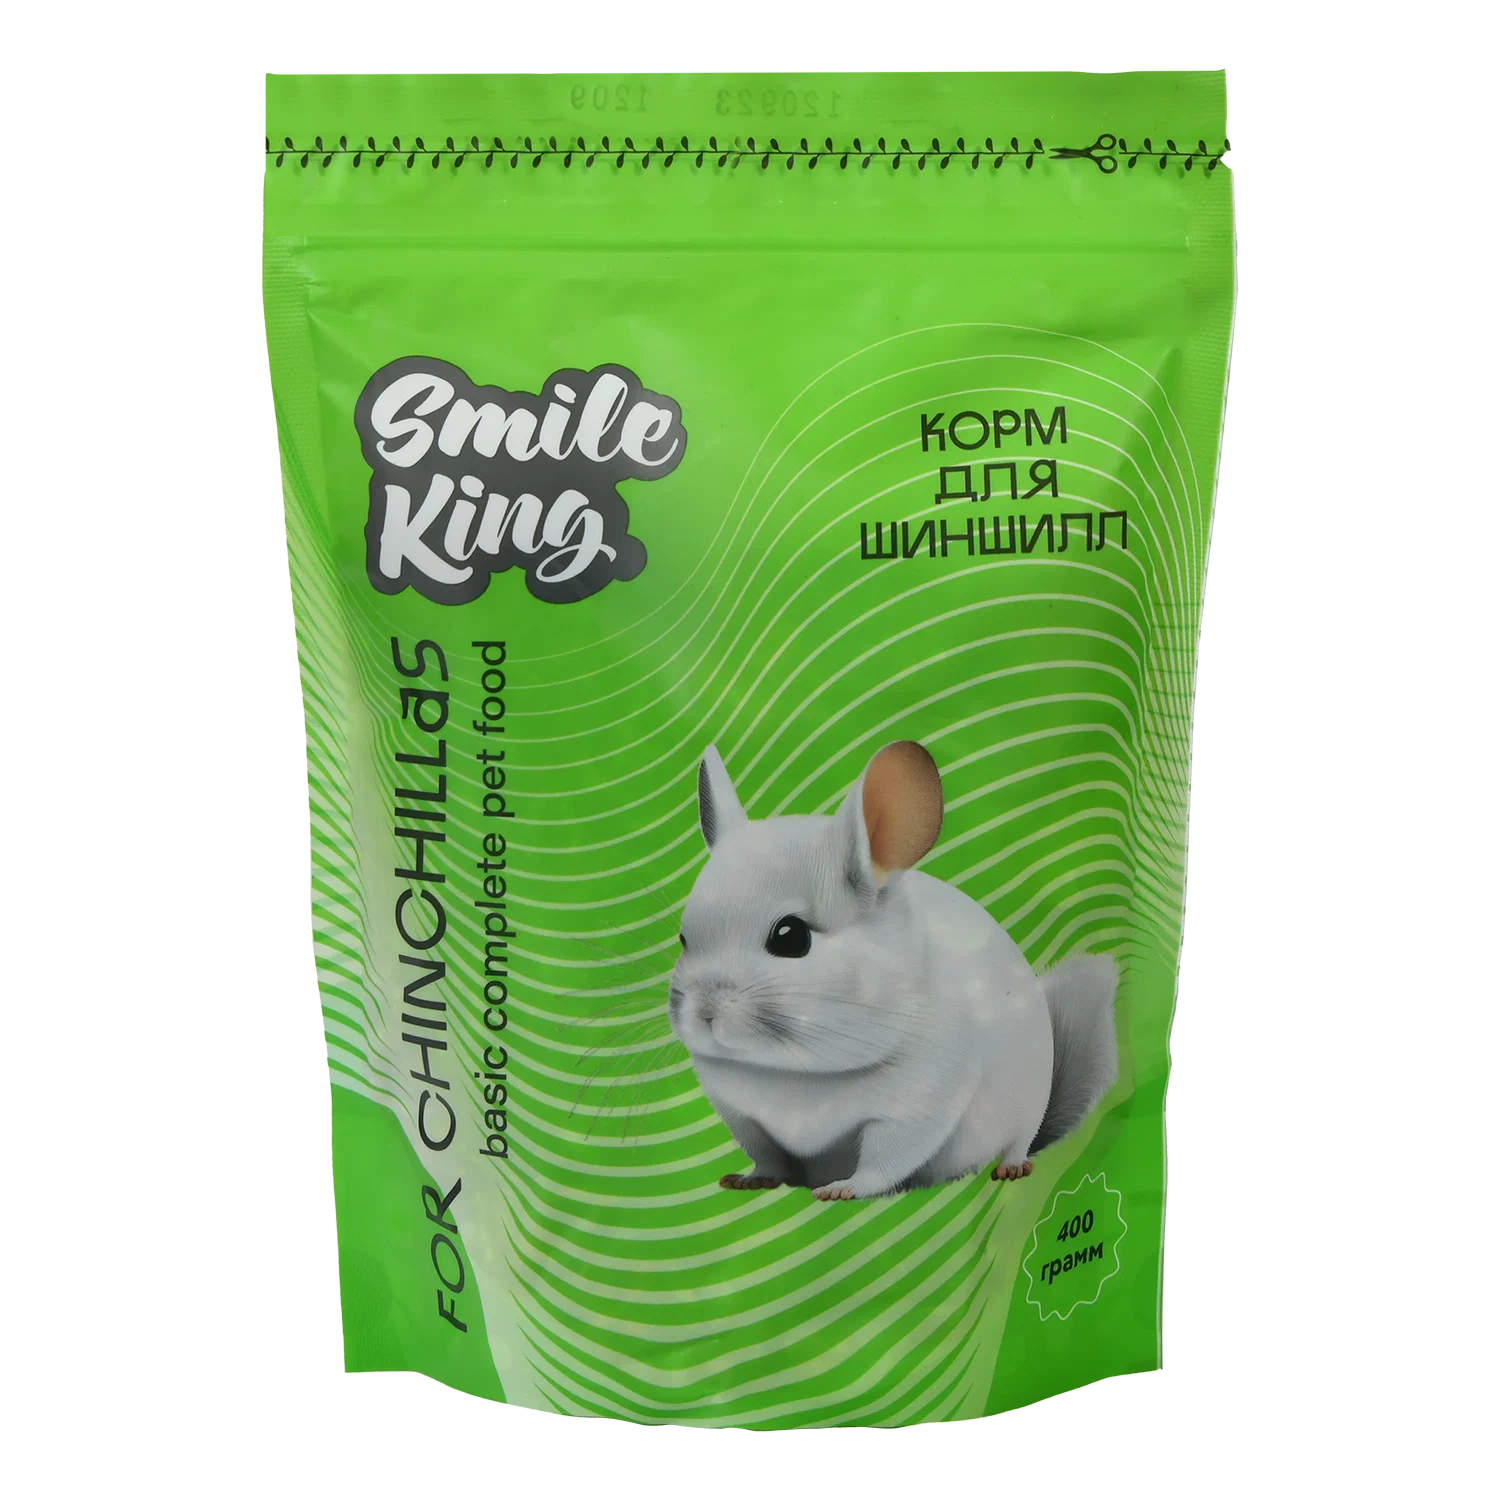 Pets brunch корм. Корм для кролика smile King дой-пак пакет 600 г. Little King корм для хомяка. Корм для крыс smile King. Корма короля.